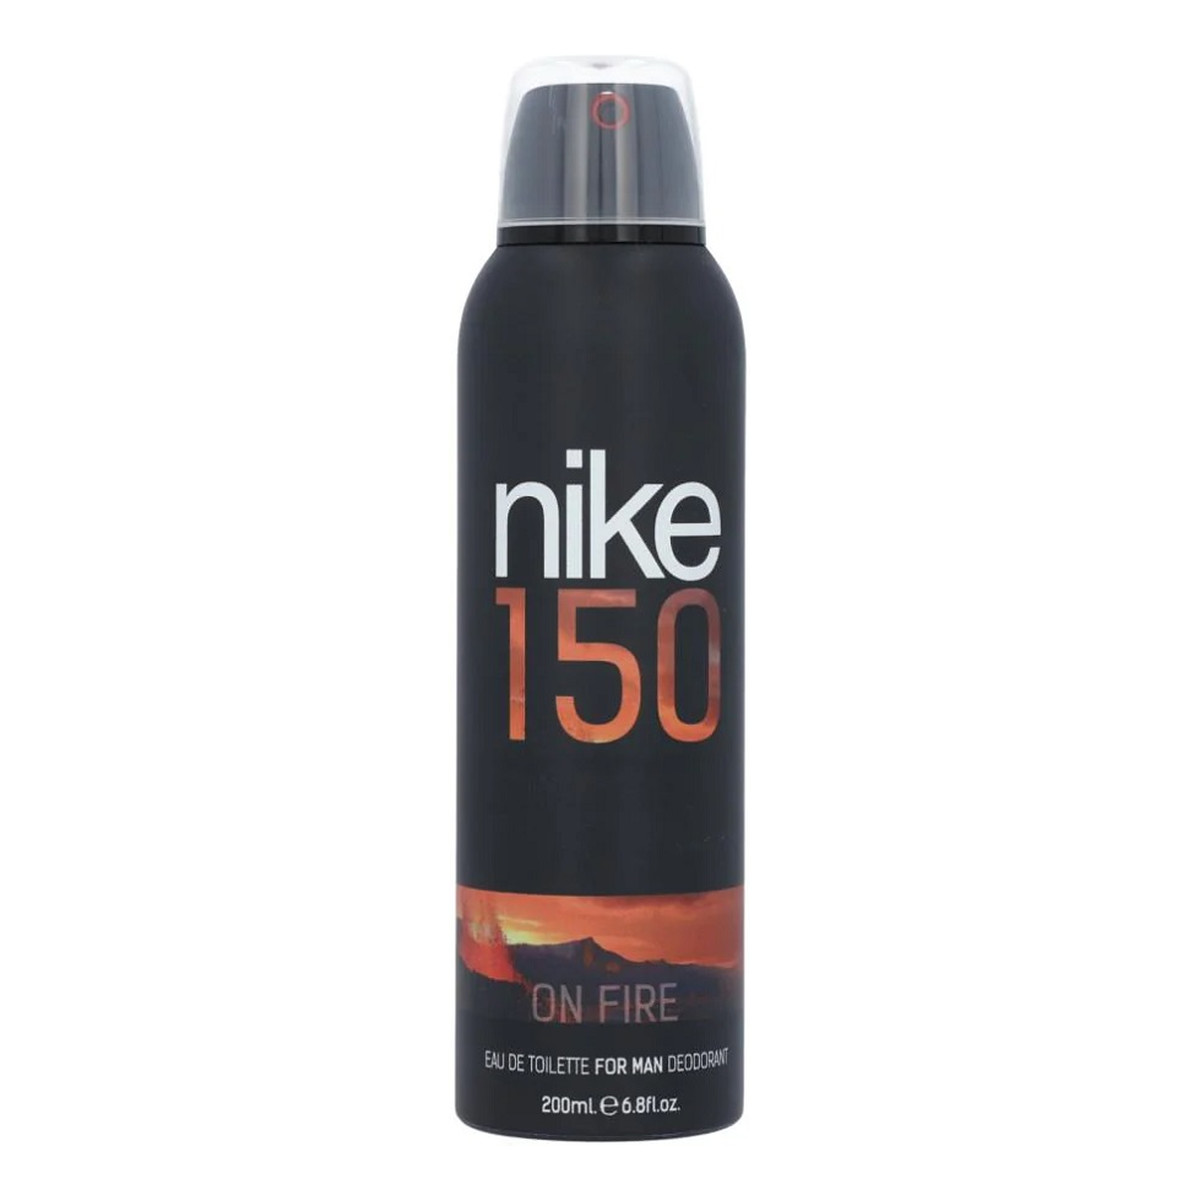 Nike 150 On Fire Dezodorant spray 200ml